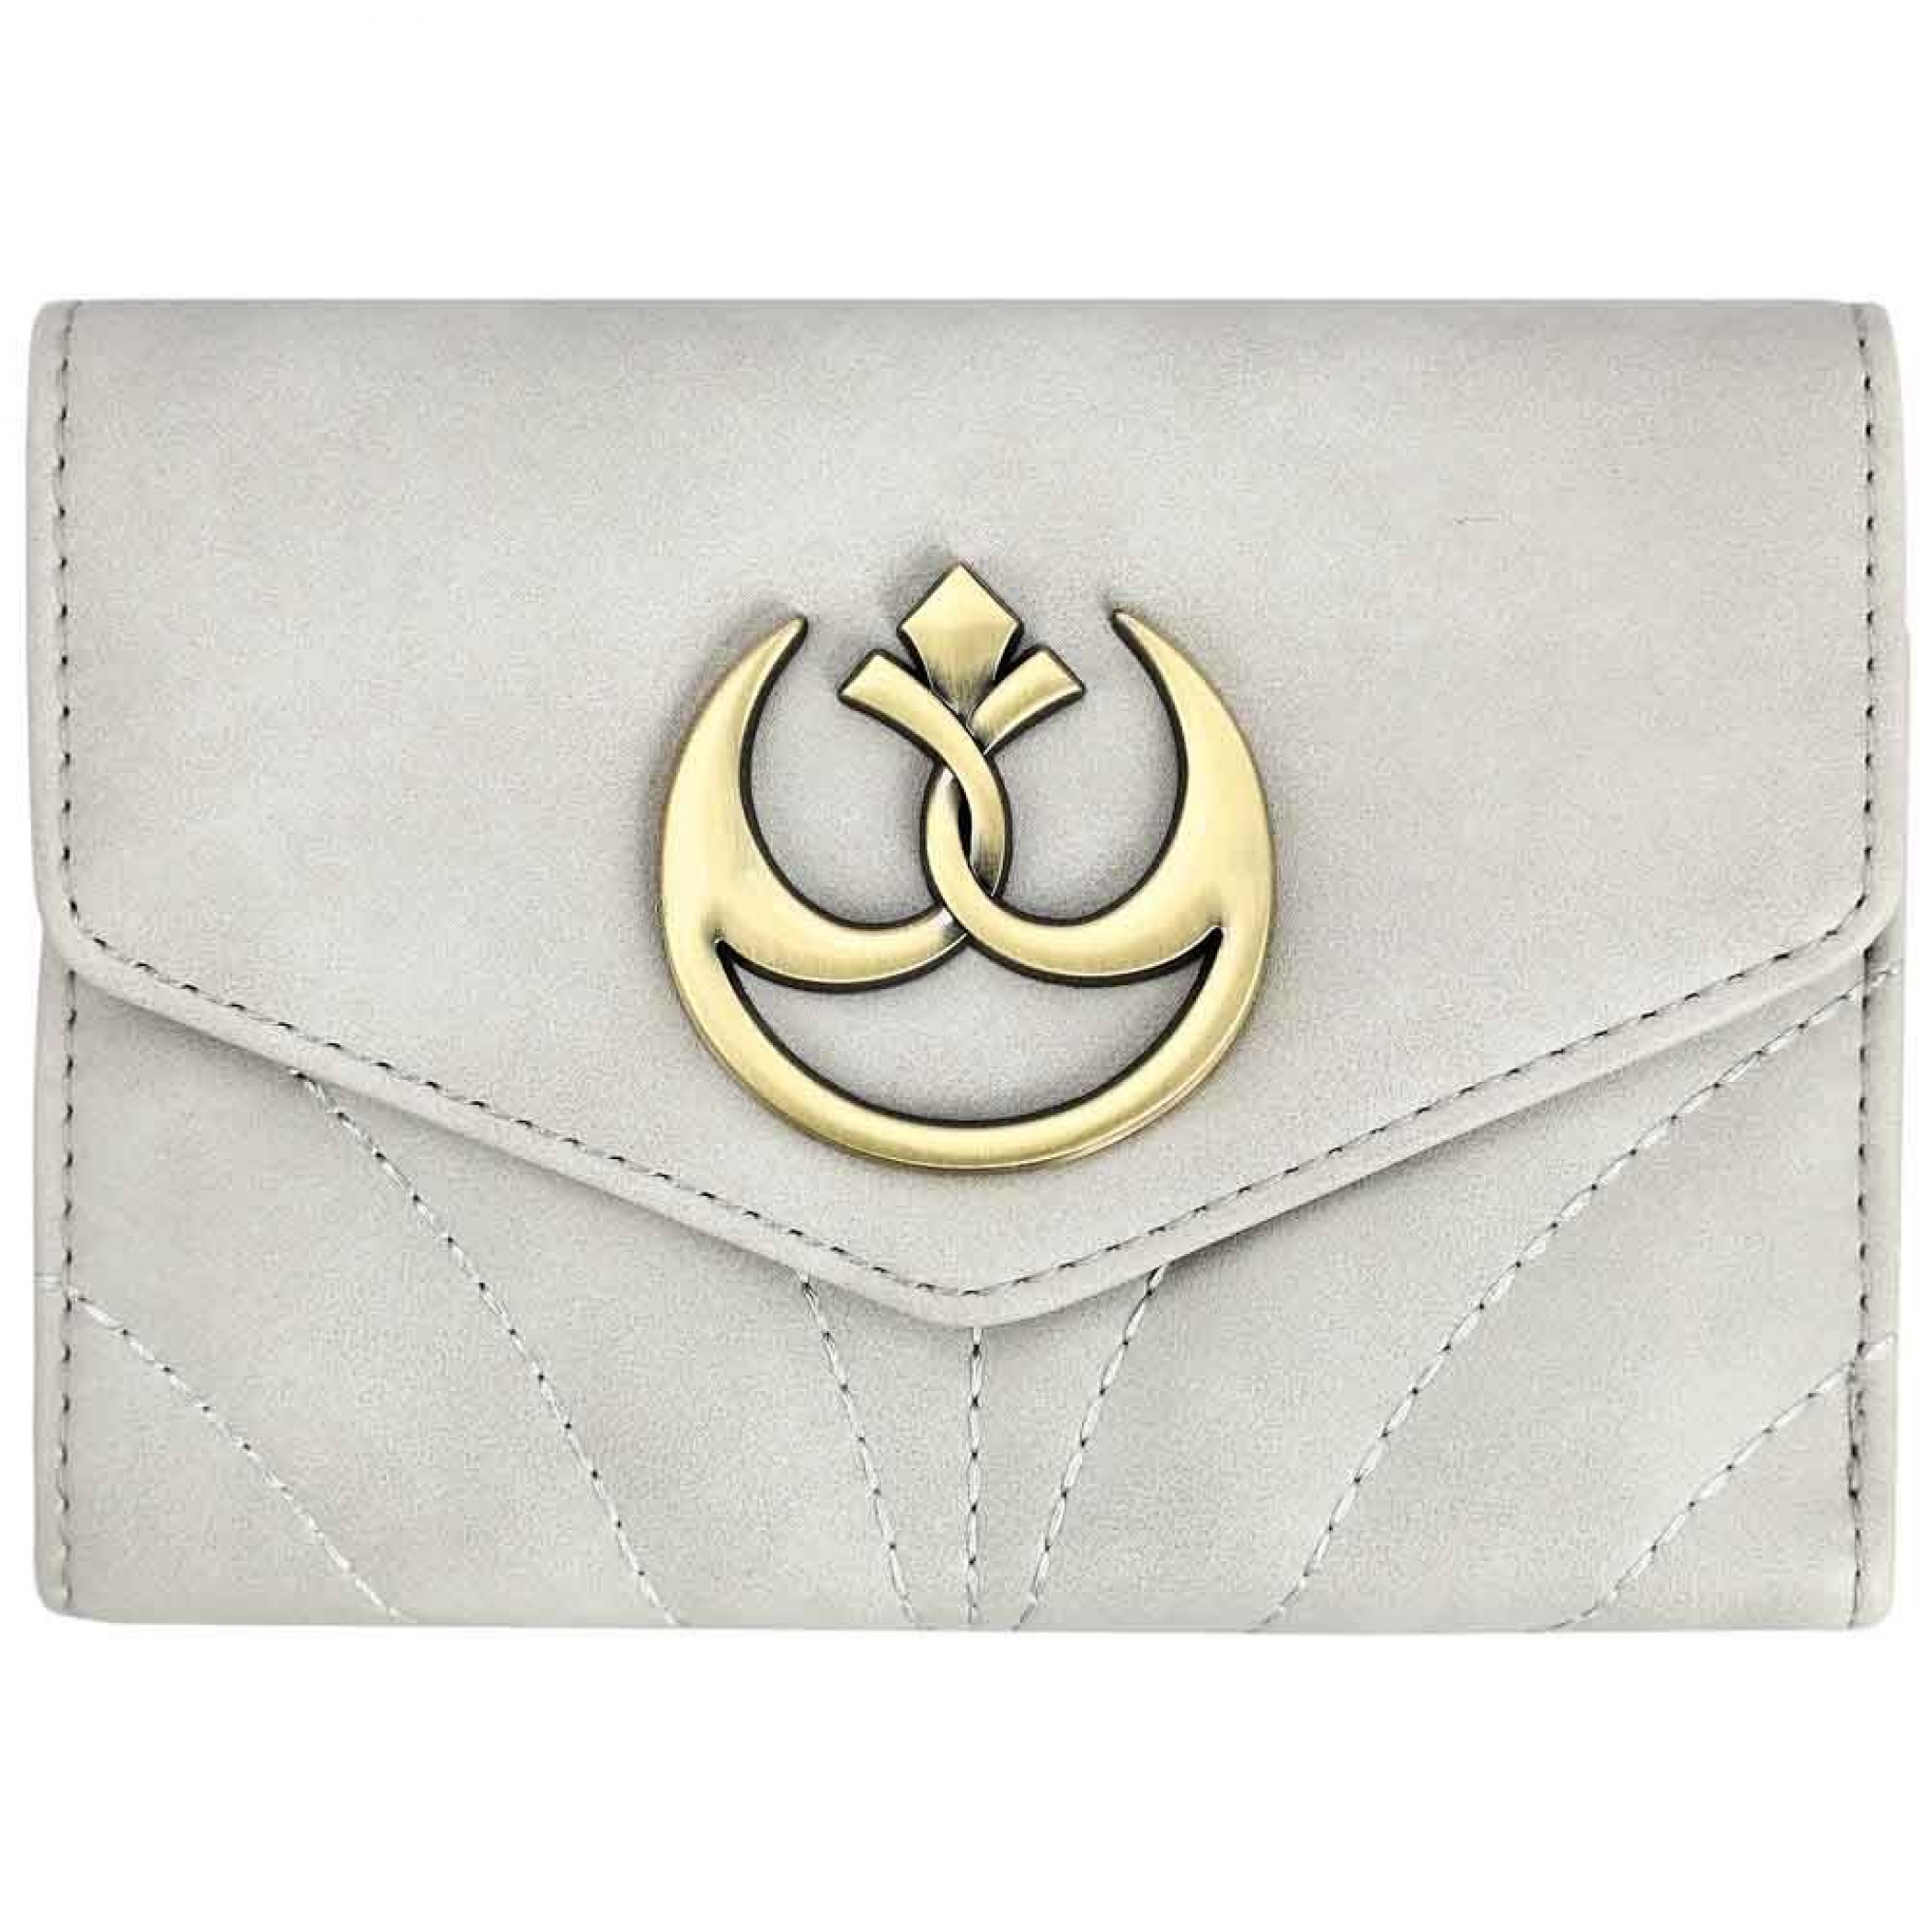 Star Wars Princess Leia Inspired w/ Rebel Alliance Logo Wallet